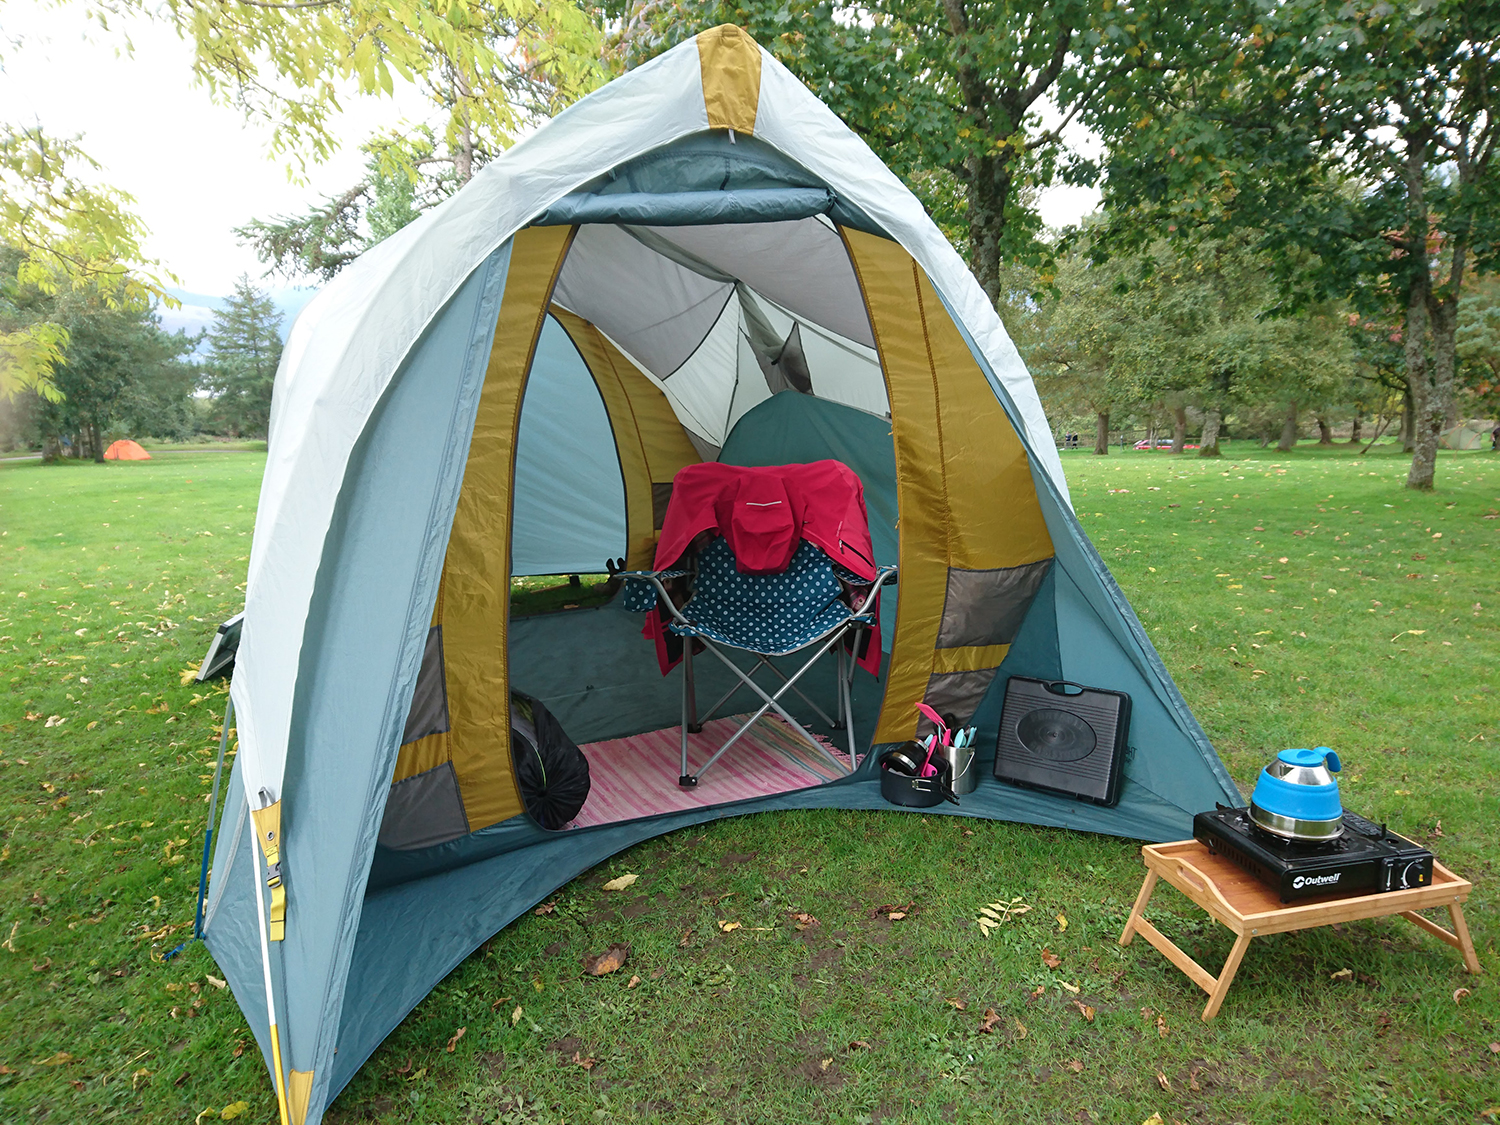 Castlerigg Hall campsite